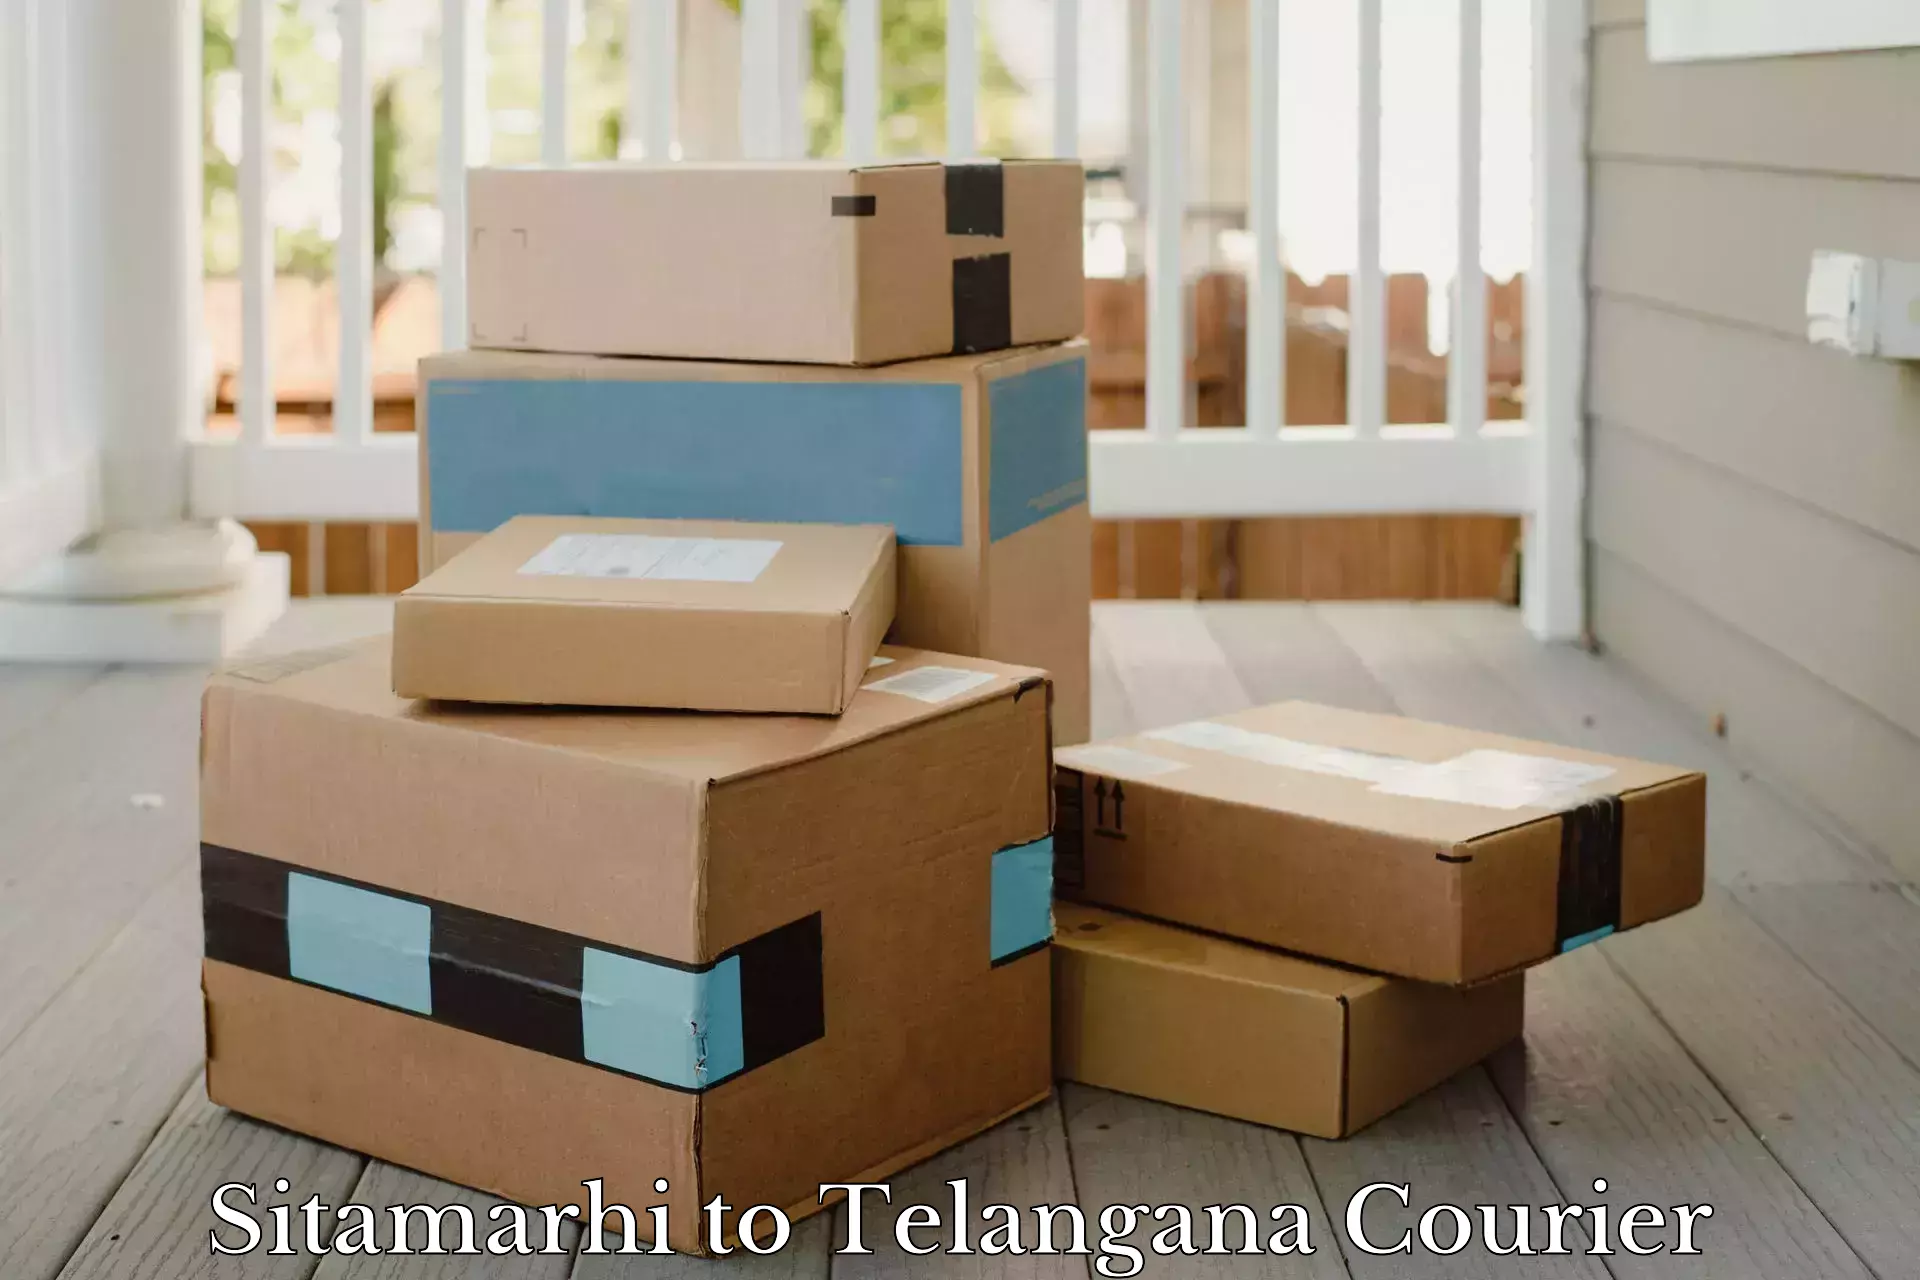 Courier service comparison Sitamarhi to Netrang